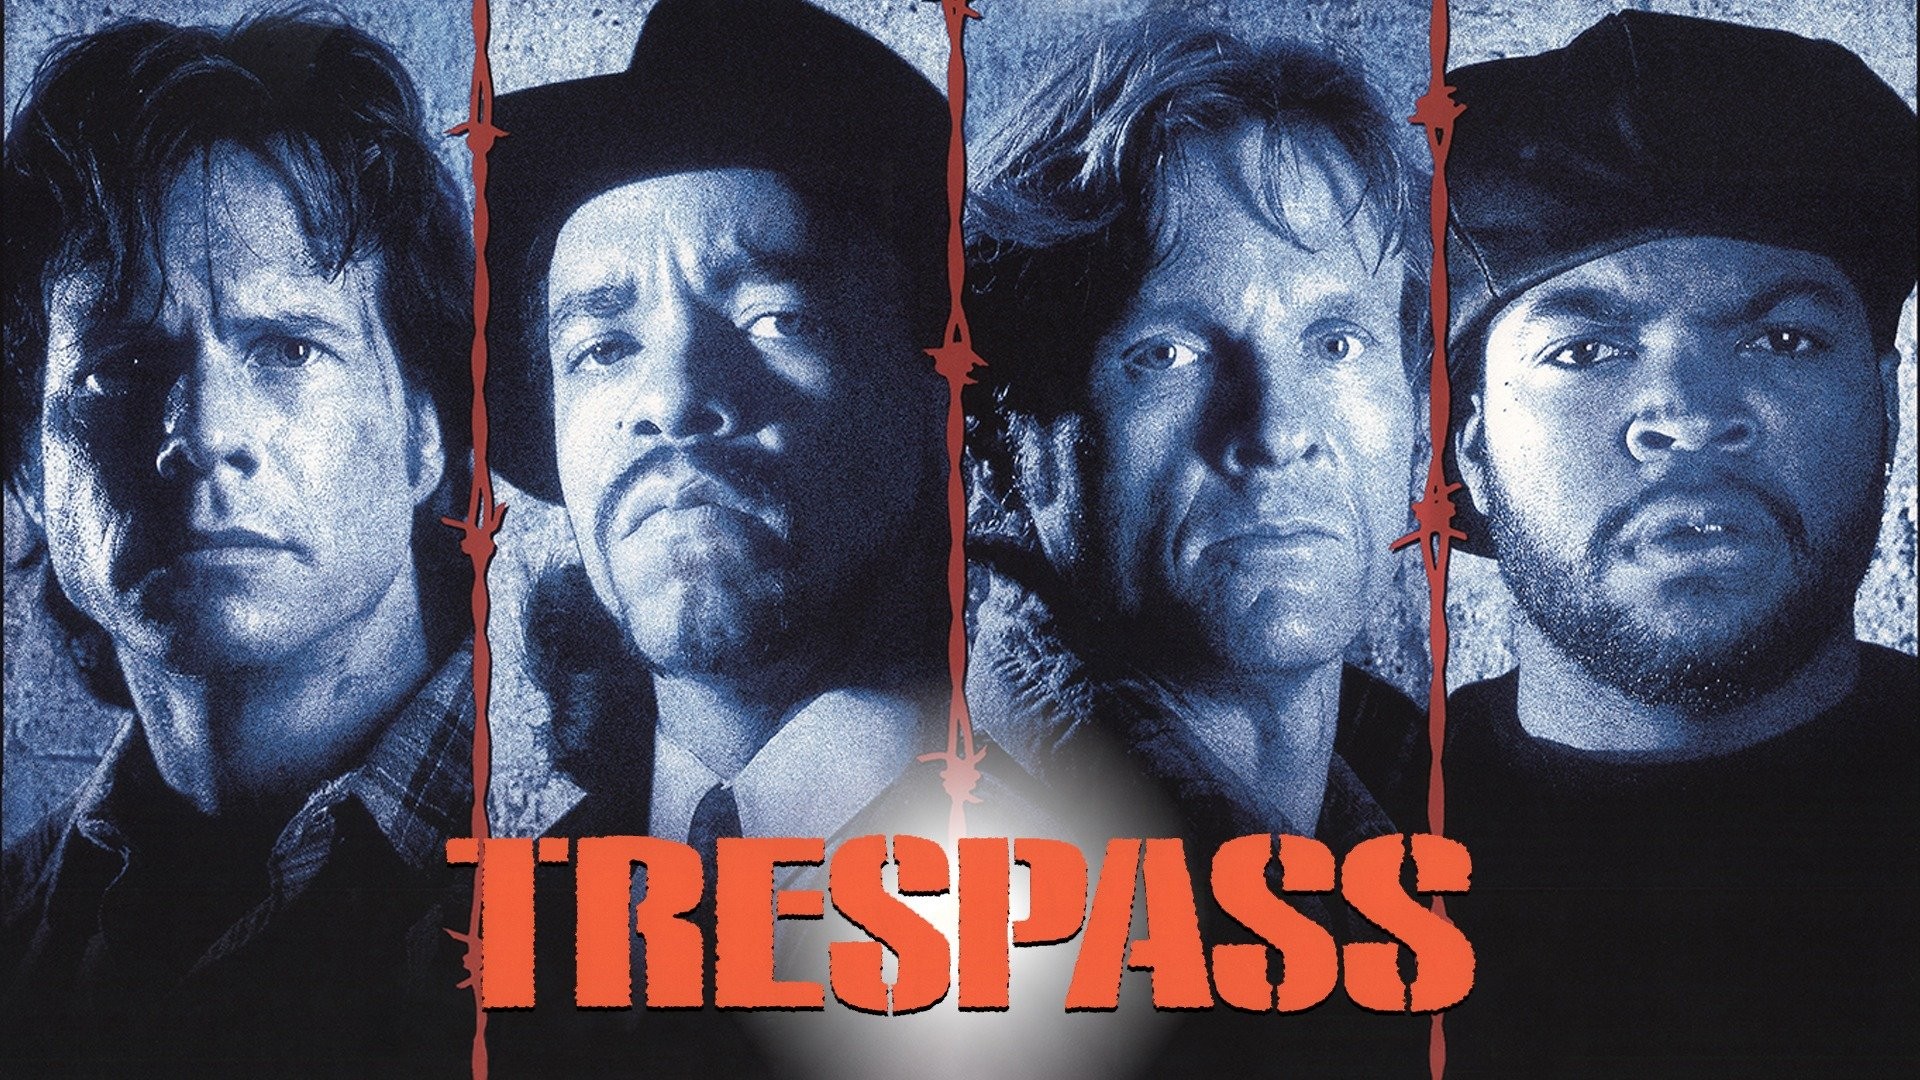 Trespass [DVD] - Nicholas Cage and Nicole Kidman | eBay